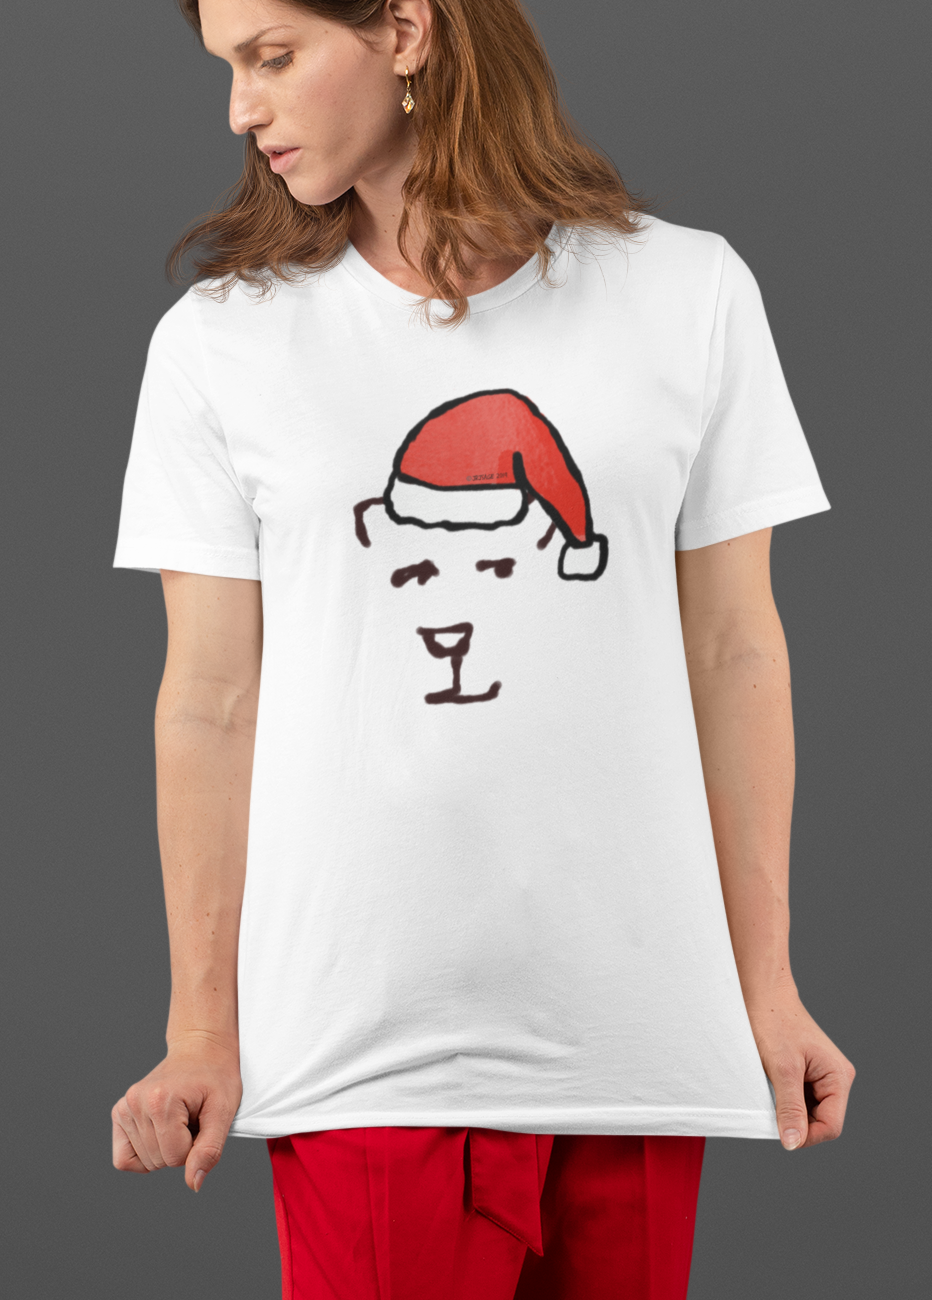 Young woman wearing a Santa Polar Bear cute Christmas T-shirt illustrated design by Hector and Bone on a Vegan tee shirt